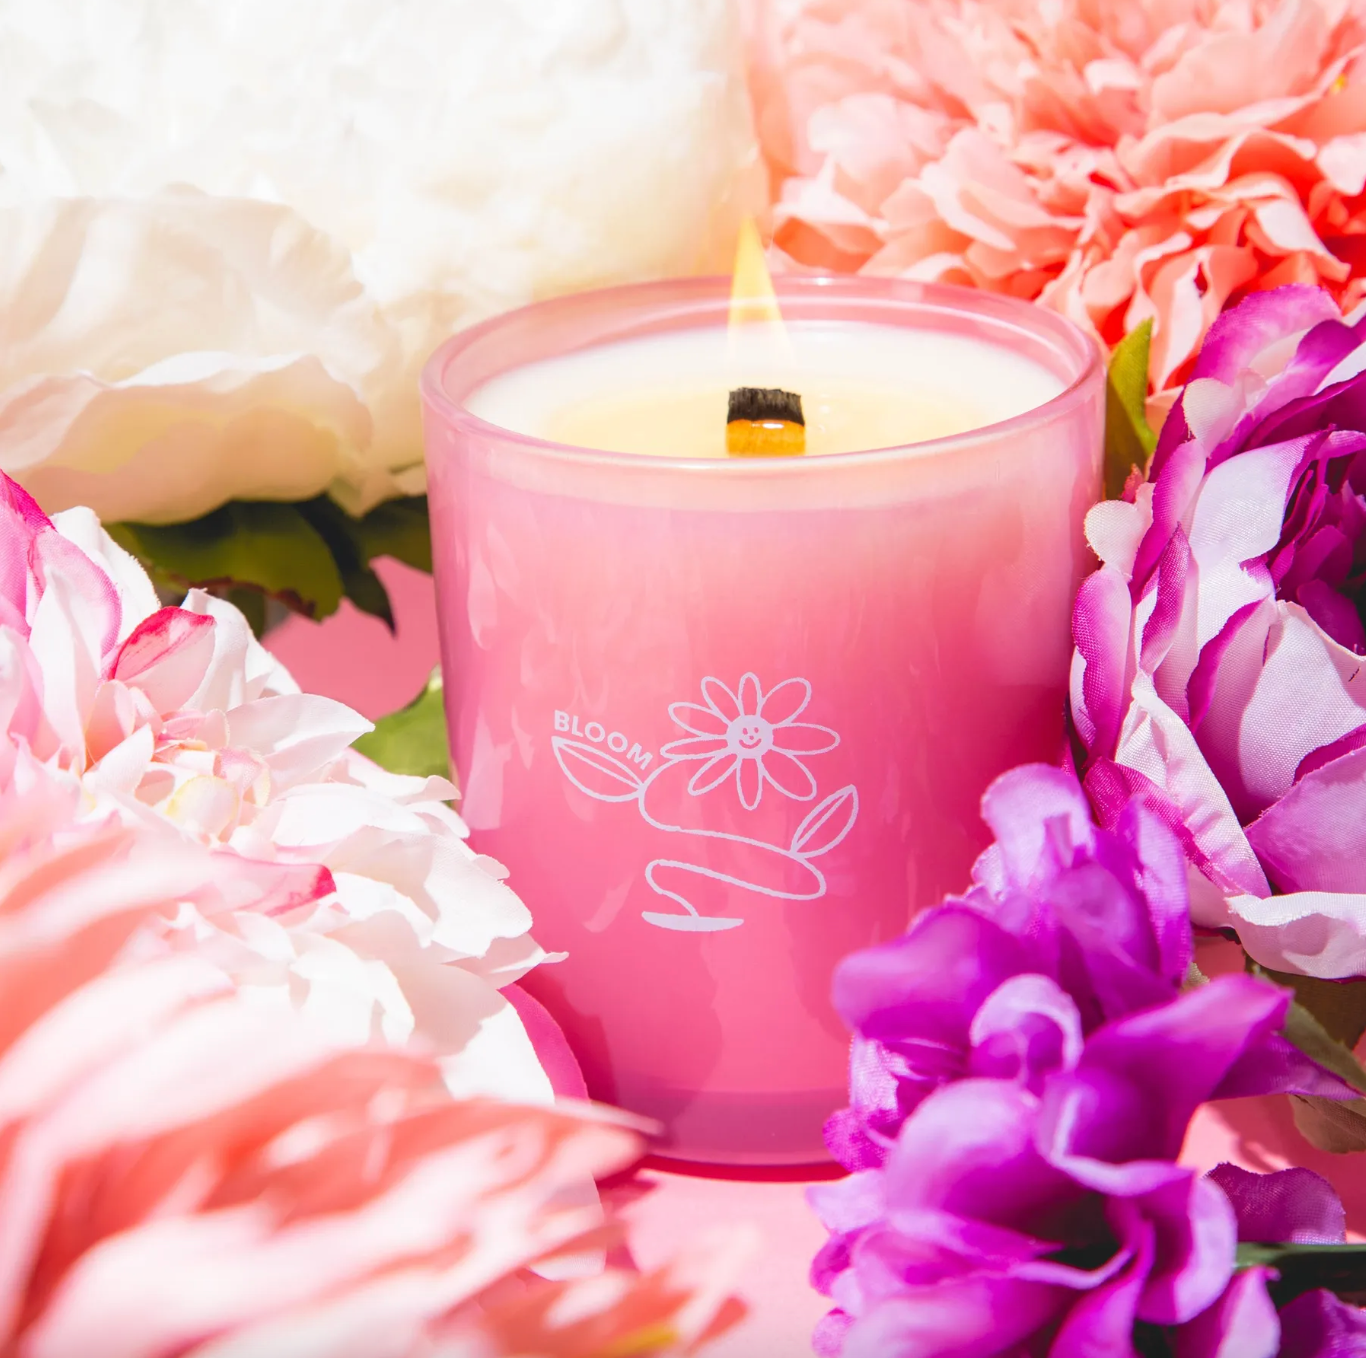 milk jar candle - bloom